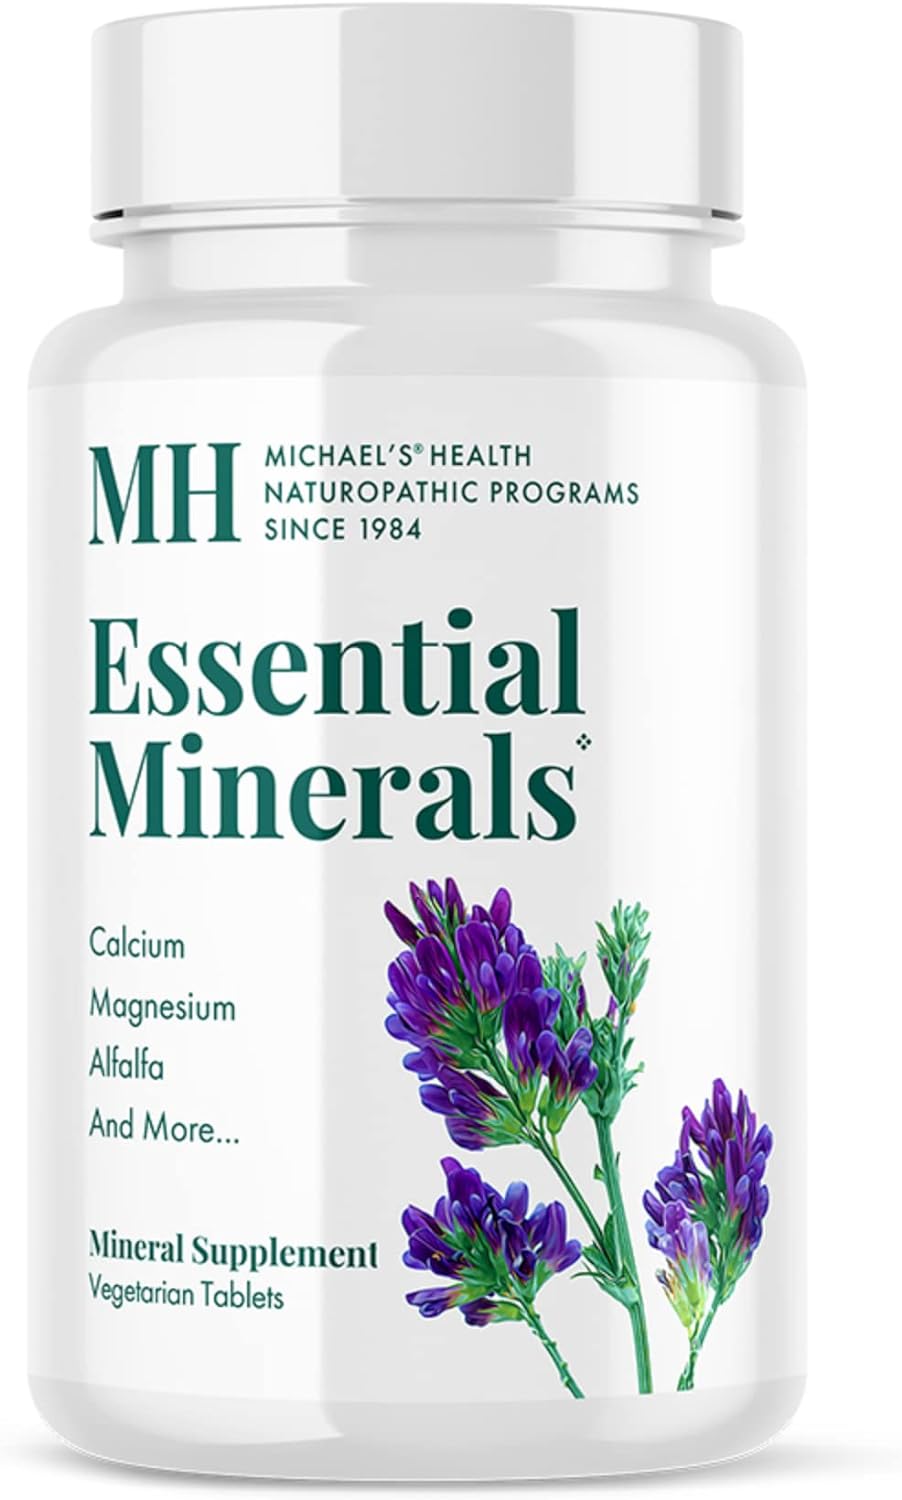 Michael's Health Naturopathic Programs Essential Minerals - 240 Vegeta